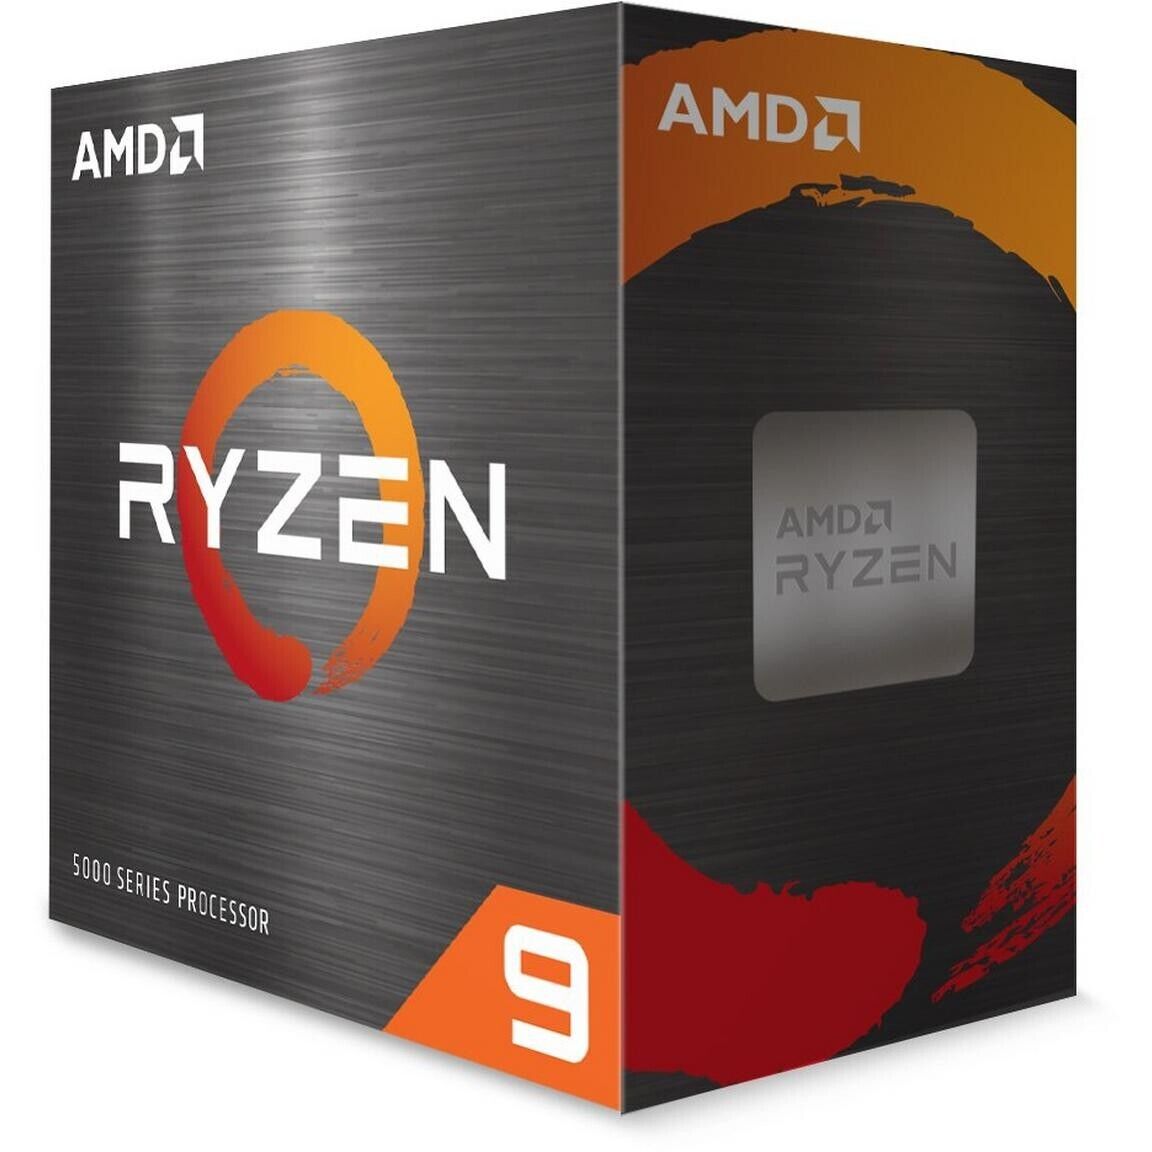 AMD Ryzen 9 5900X Desktop Processor AM4 CPU (SEALED - BRAND NEW)